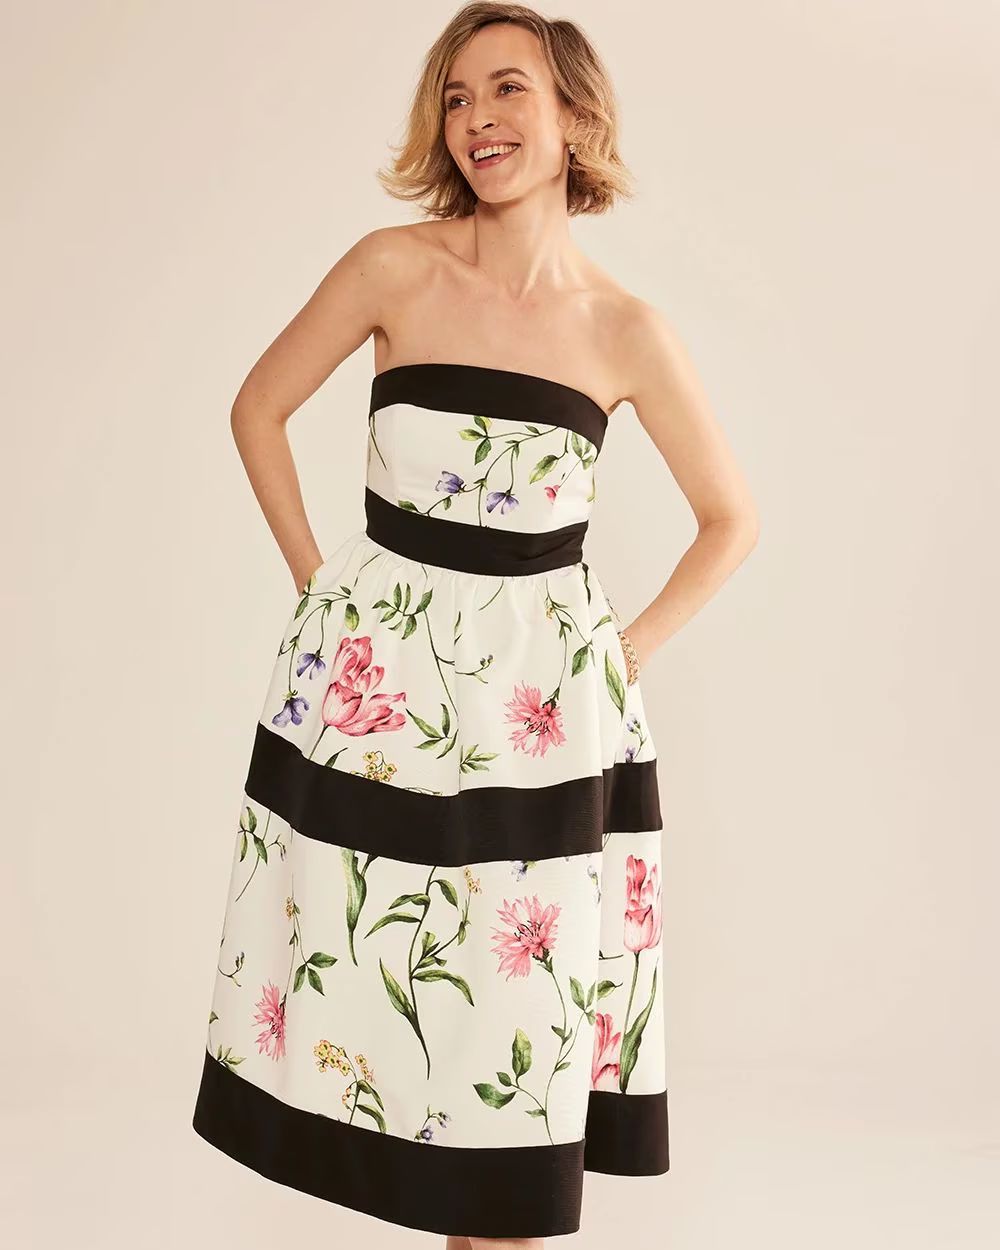 Strapless Floral Contrast Fit & Flare Dress | White House Black Market